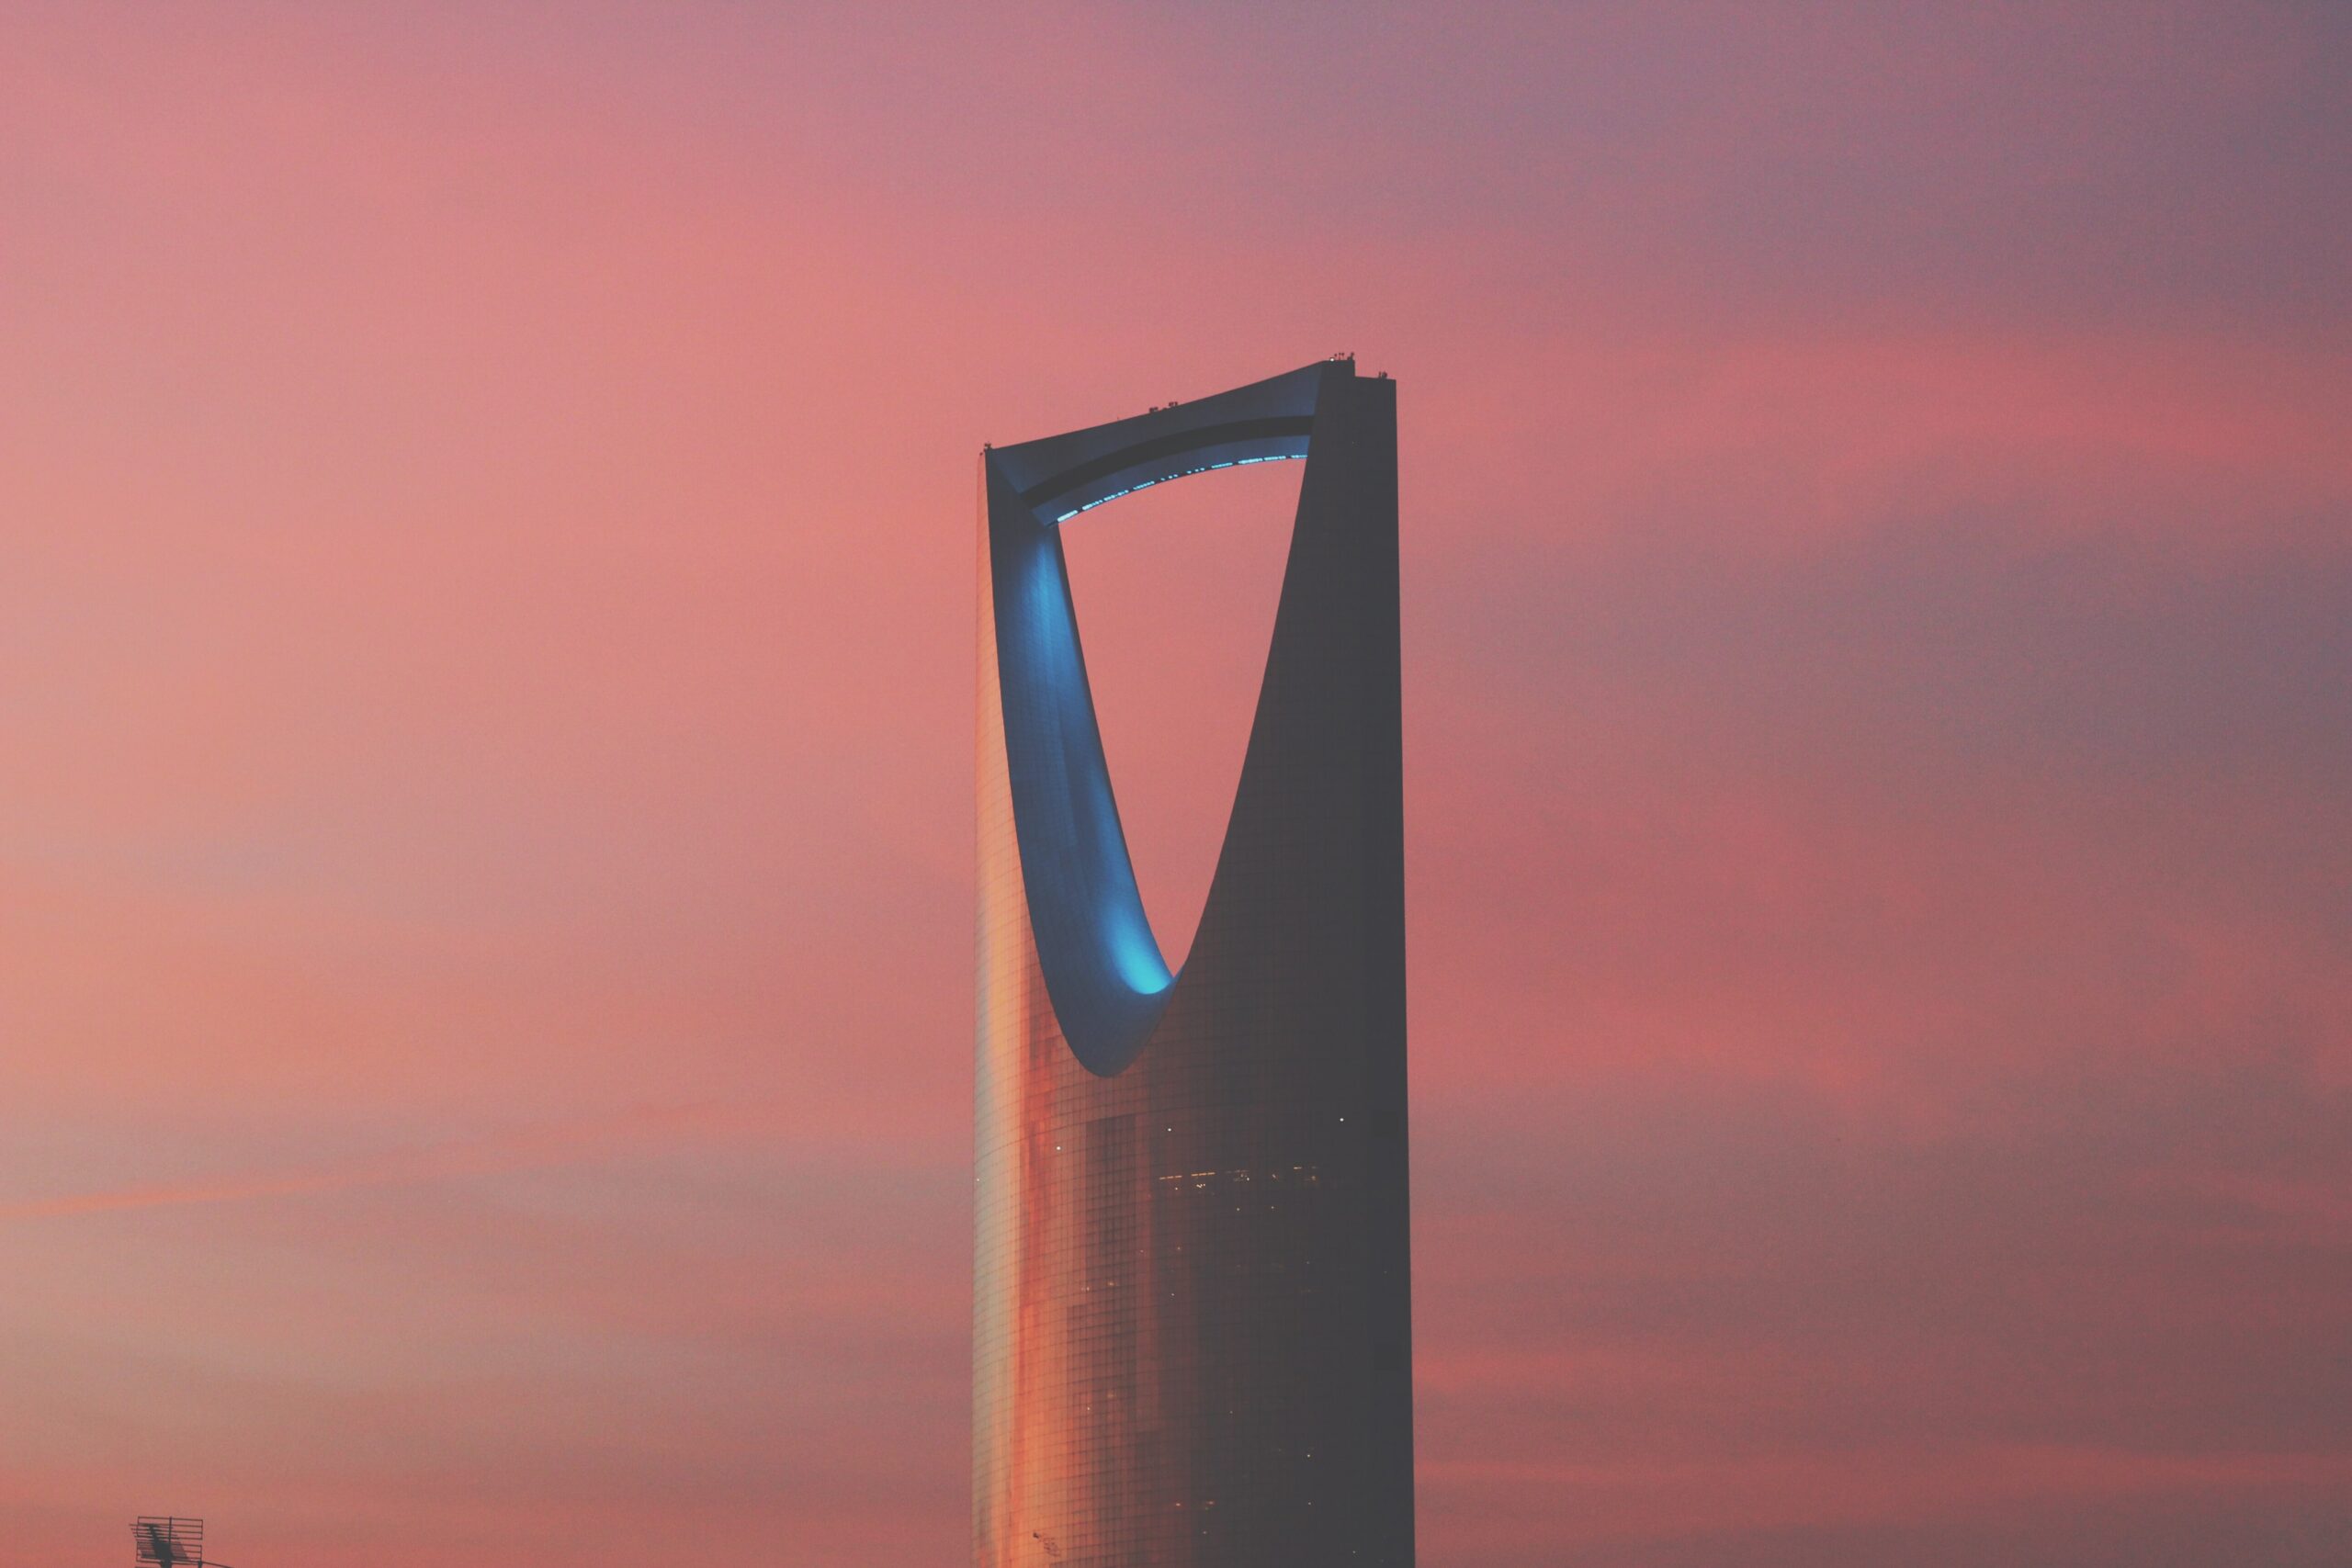 Picture showing the Kingdom Center in Riyadh, Saudi Arabia